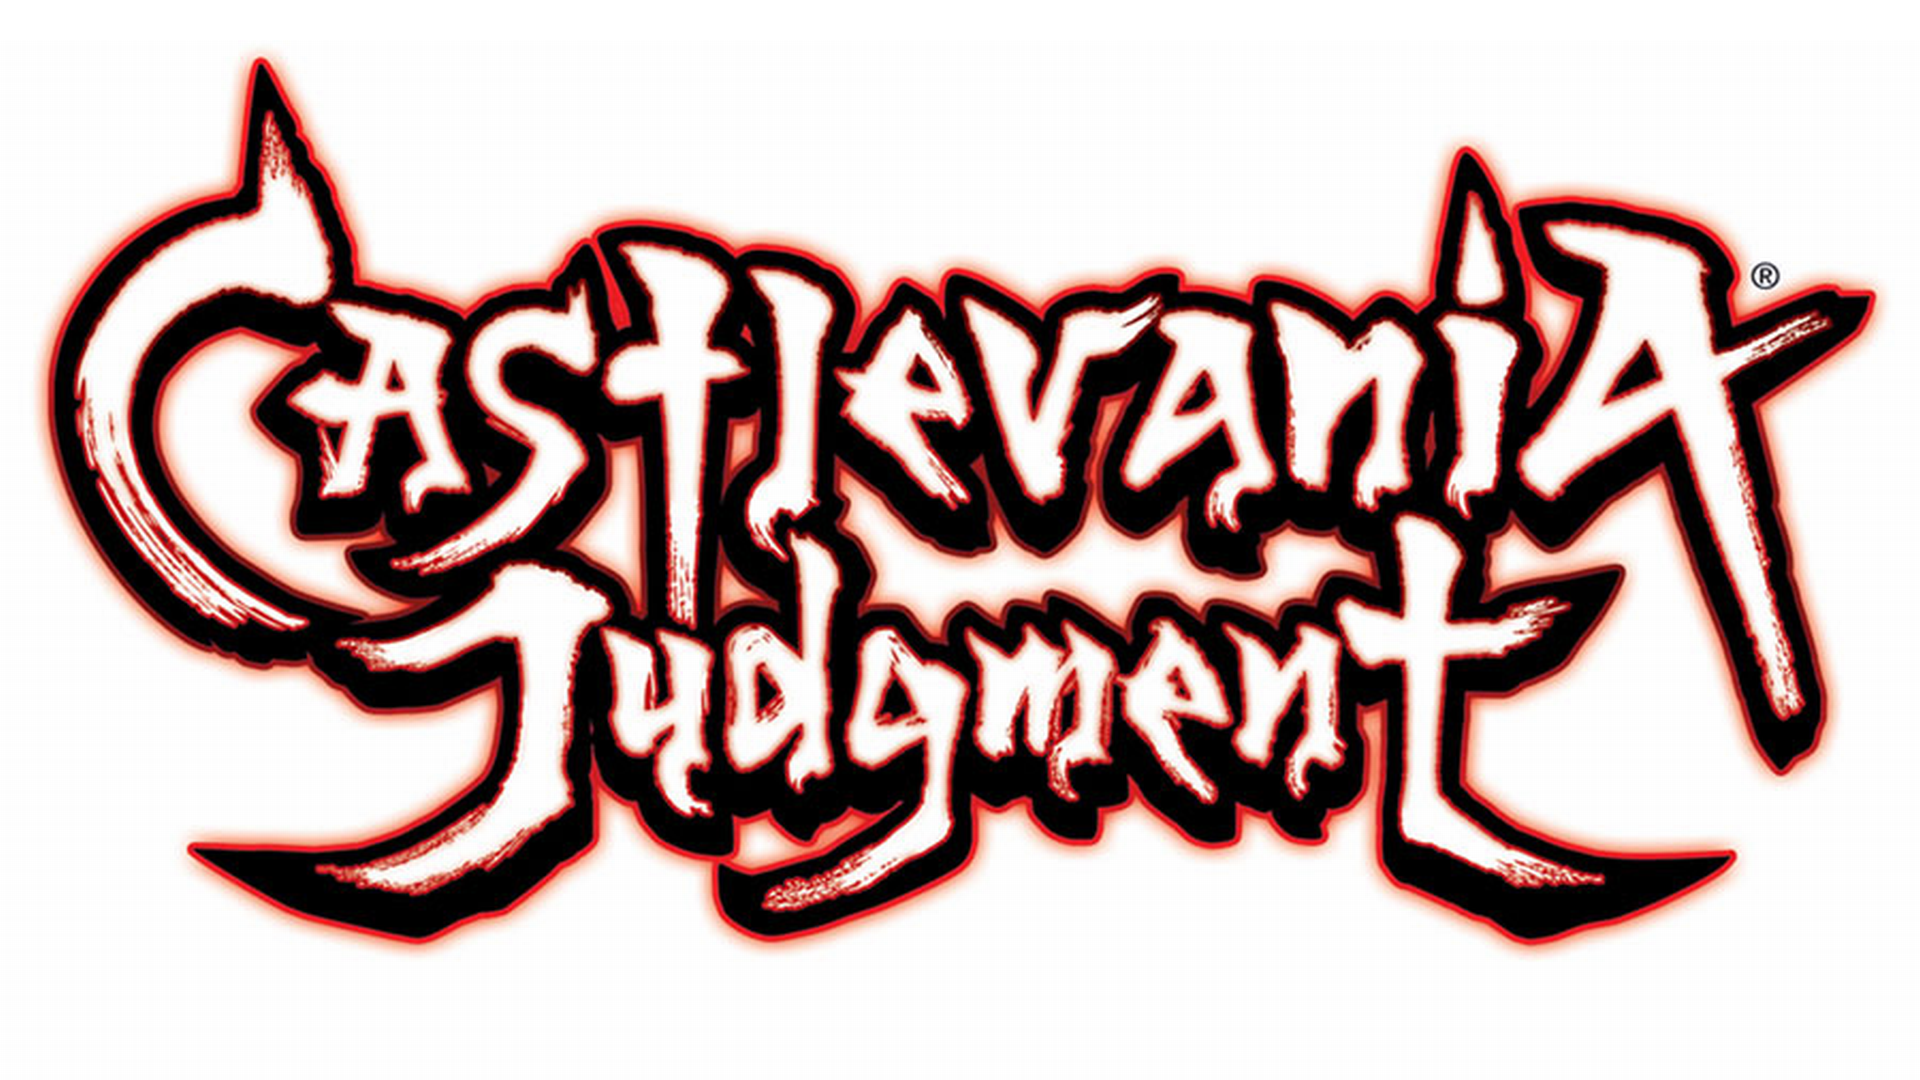 Castlevania: Judgment Logo